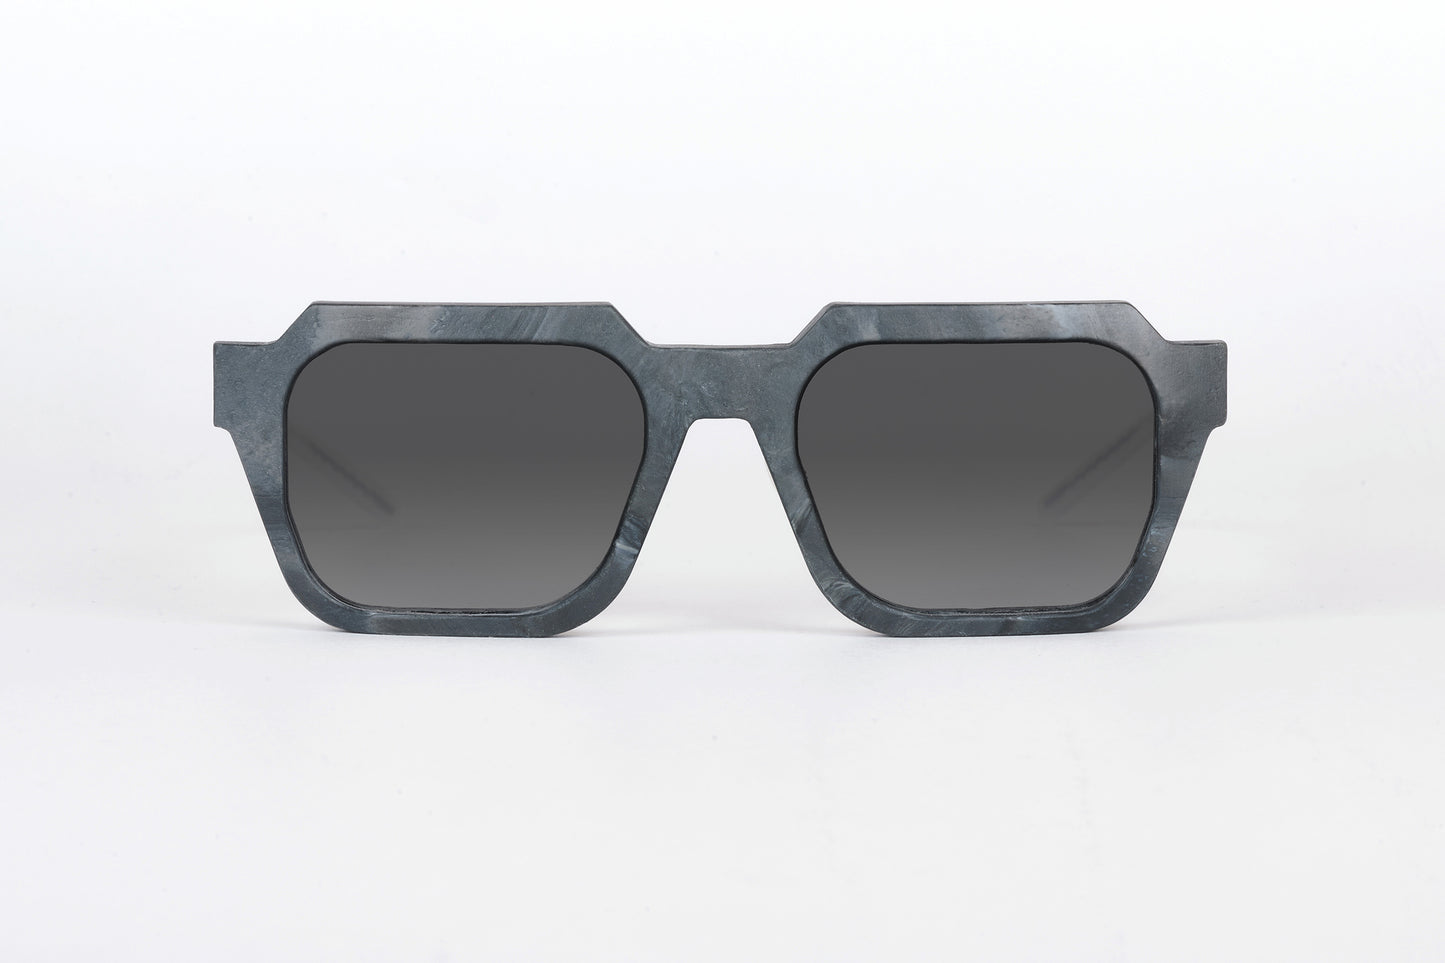 MARTIN square frame sunglasses